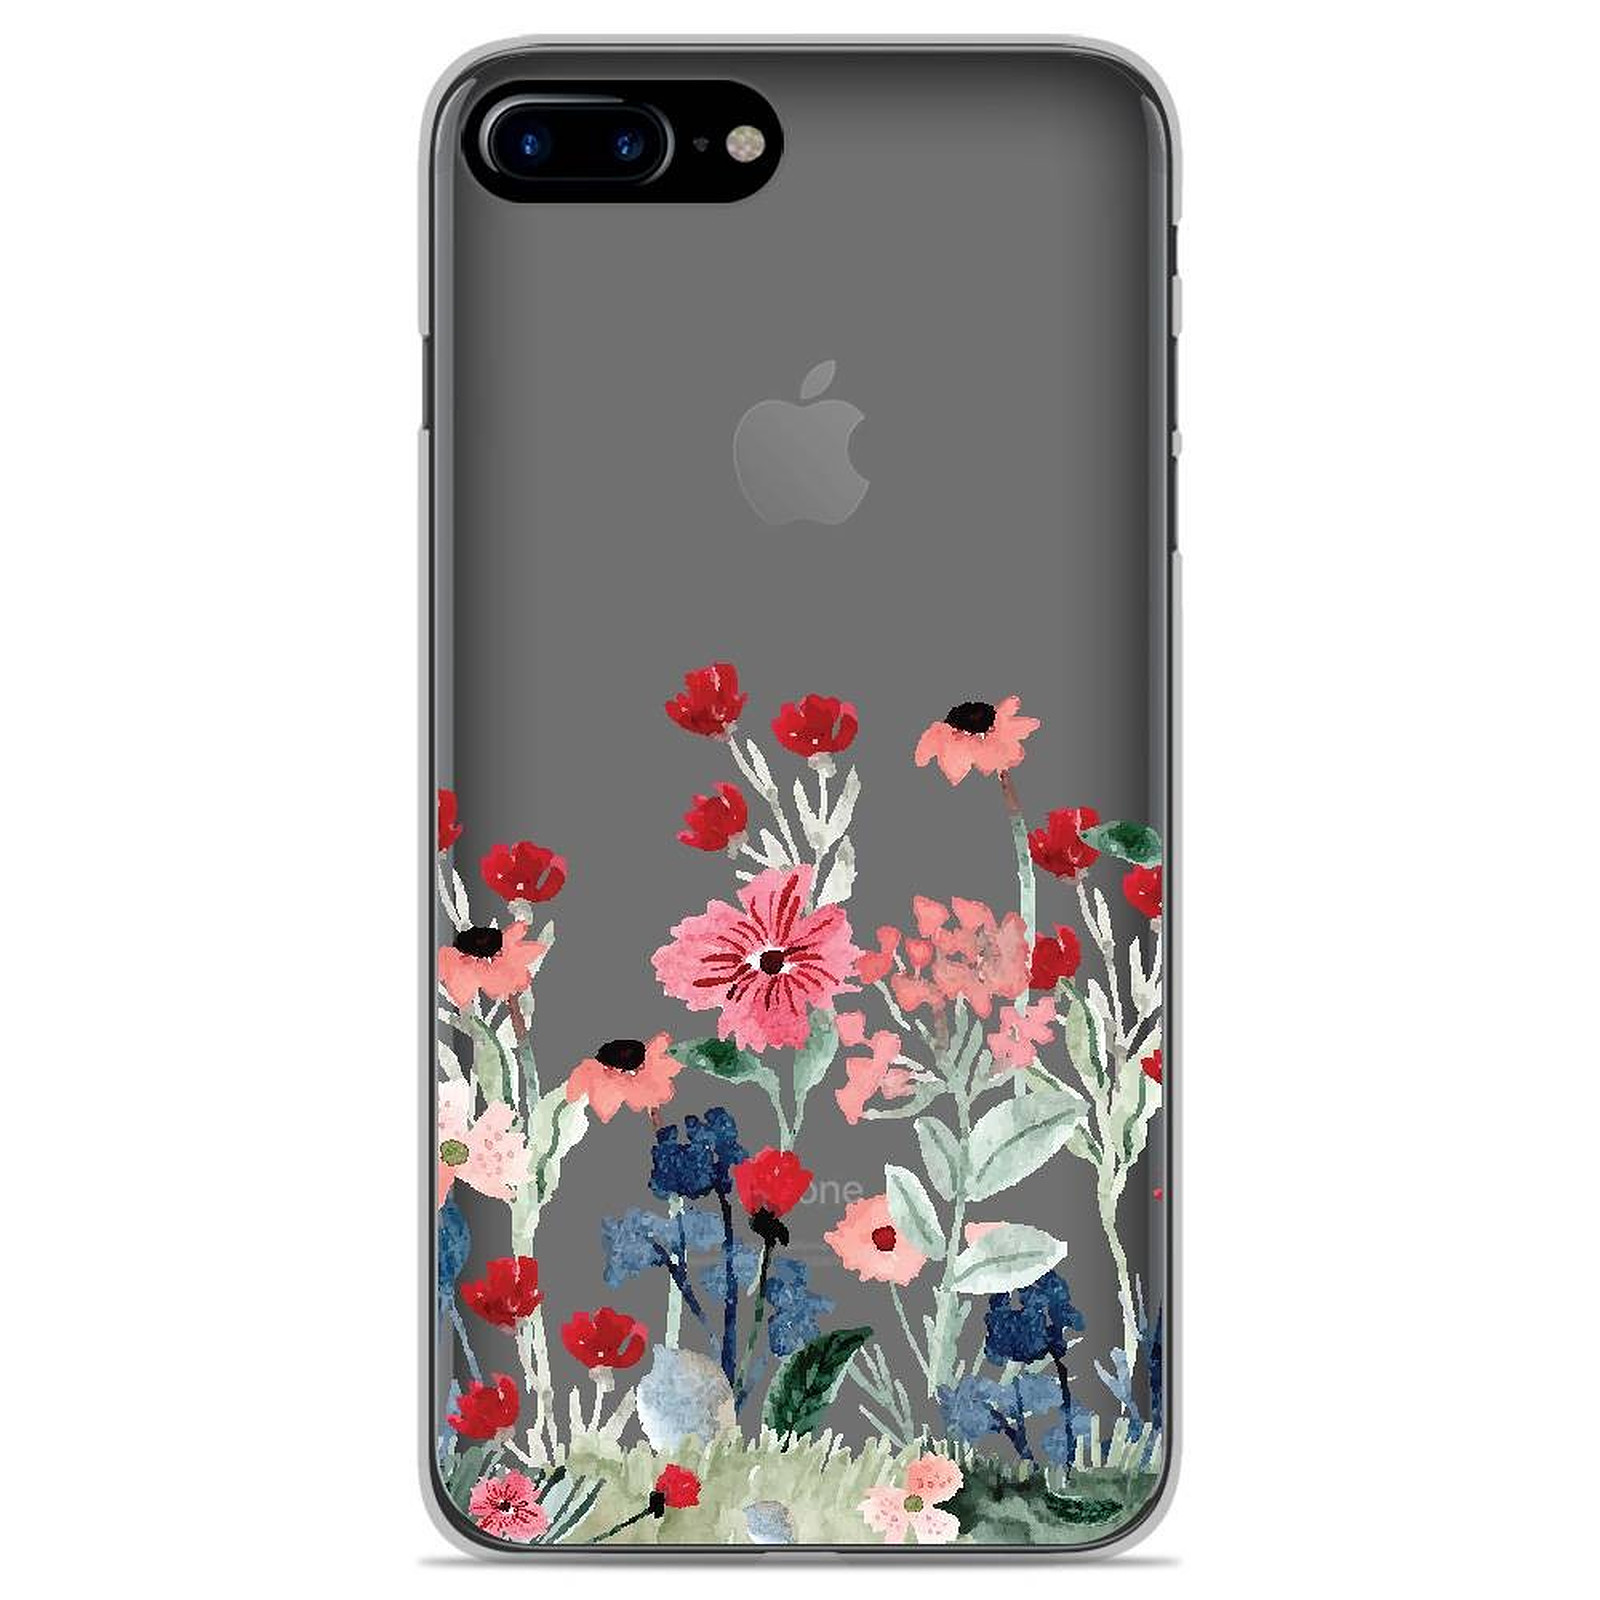 1001 Coques Coque silicone gel Apple iPhone 8 Plus motif Printemps en fleurs - Coque telephone 1001Coques